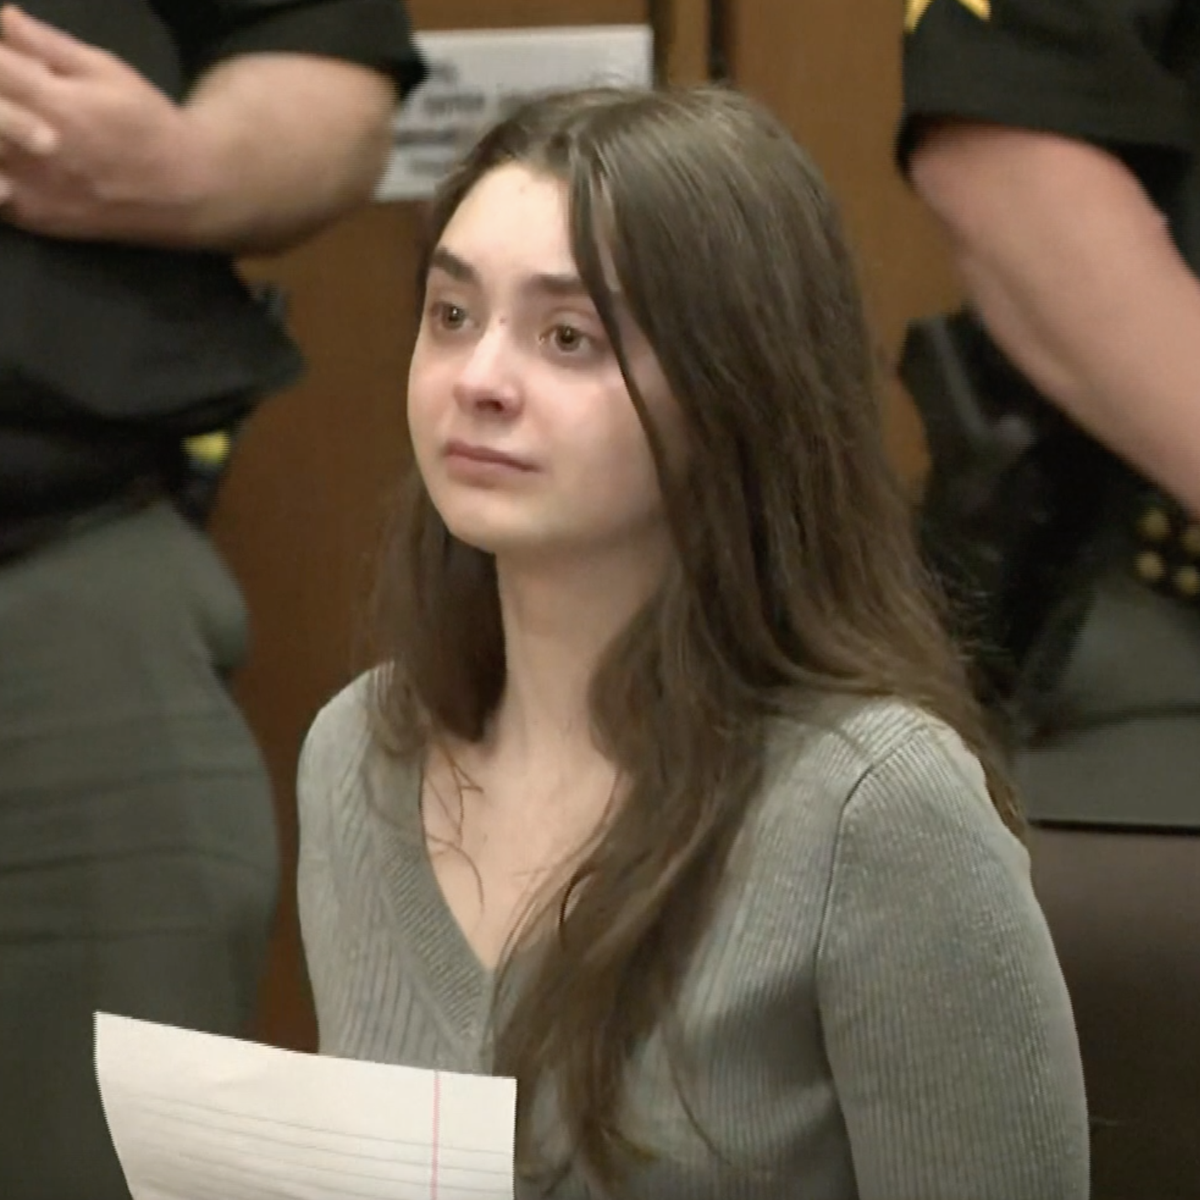 Teen Gets Prison Sentence for Murdering Boyfriend, Friend in Car Crash